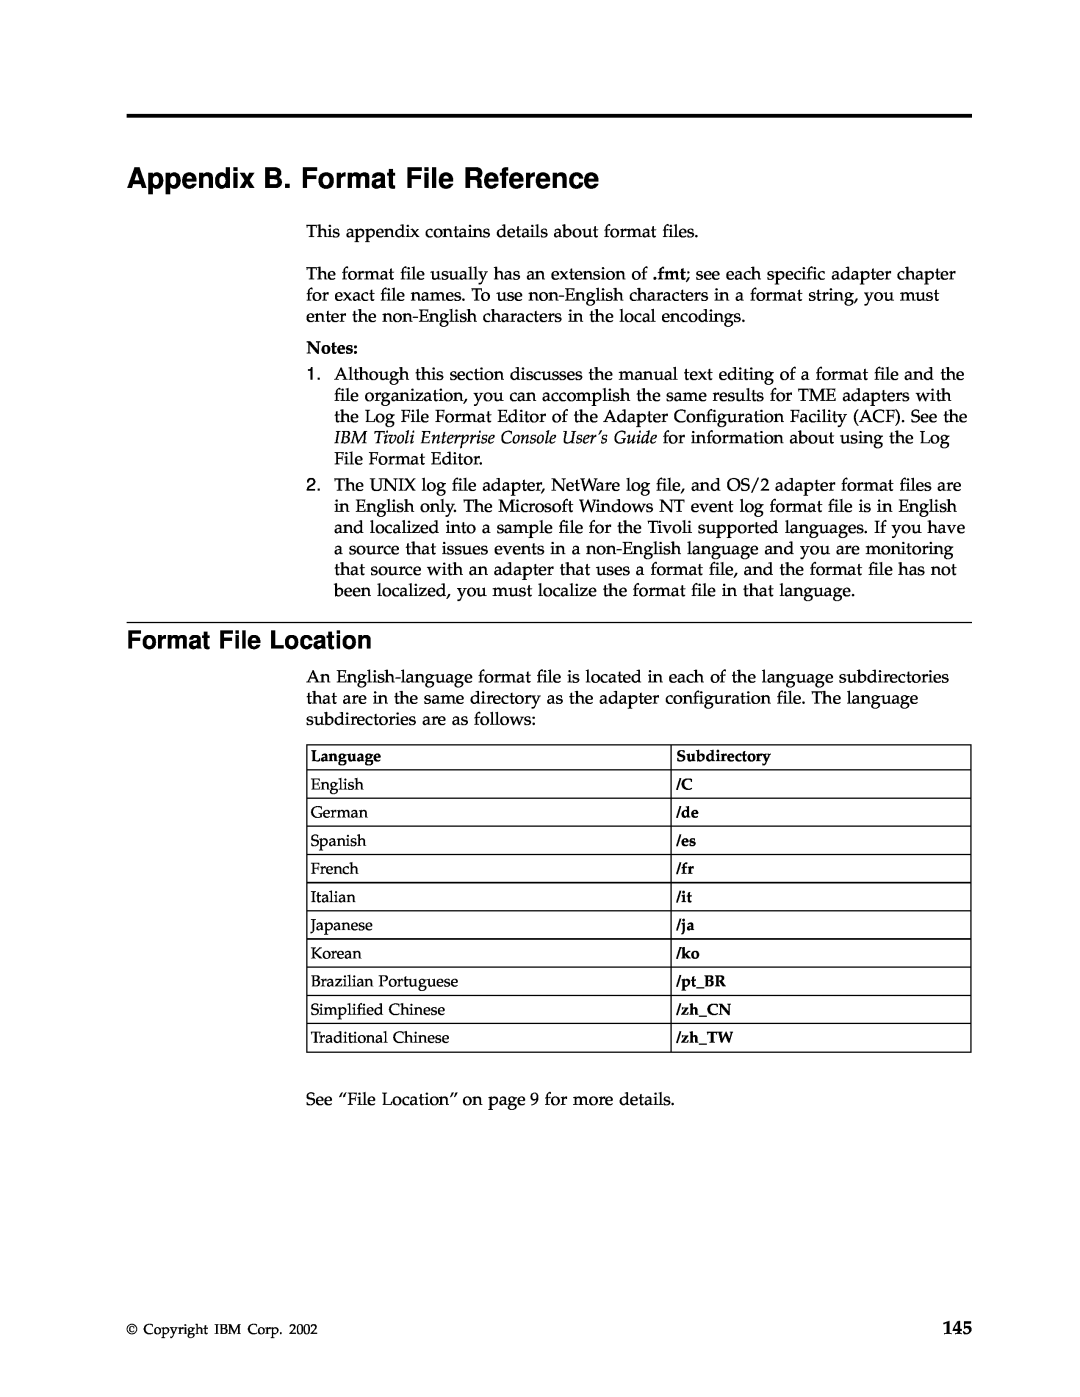 IBM Enterprise Console manual Appendix B. Format File Reference, Format File Location 